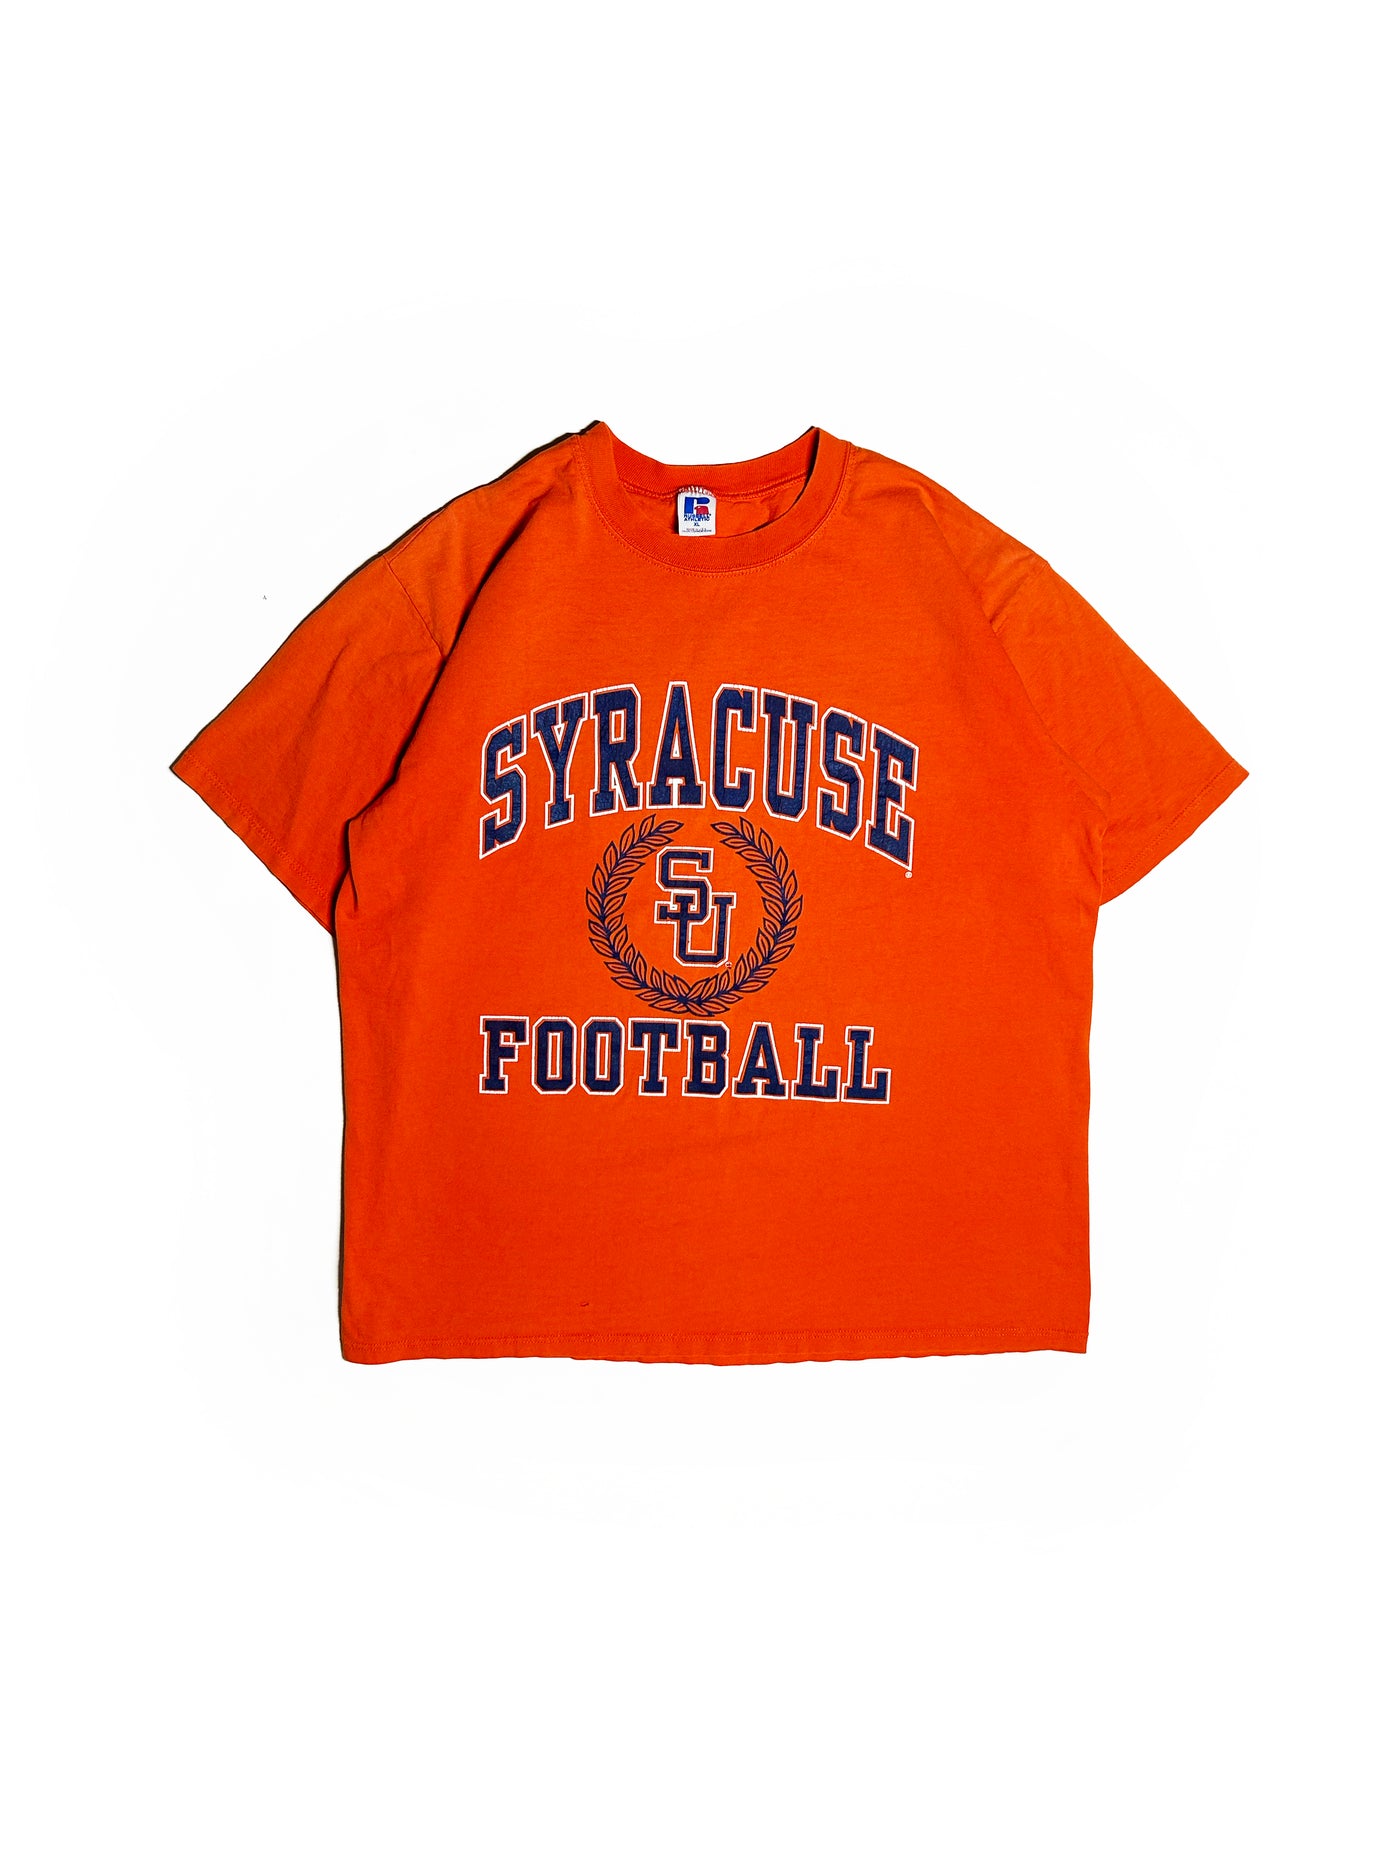 Vintage 90s Syracuse Football Russell T-Shirt